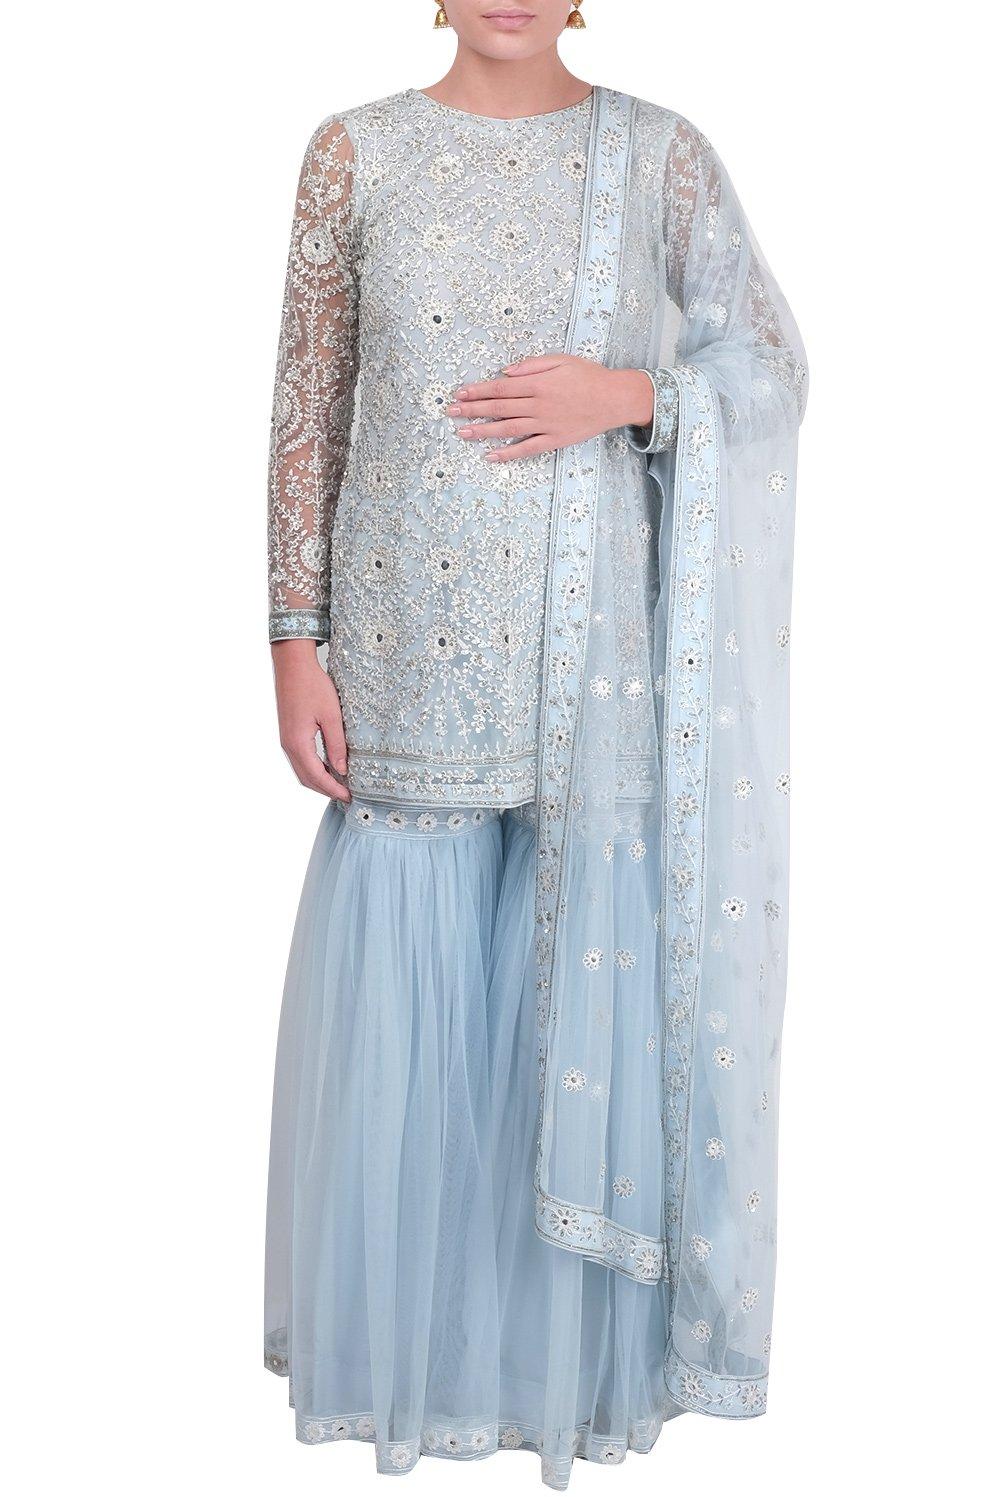 Powder Blue Embroidered Gharara Suit - kylee